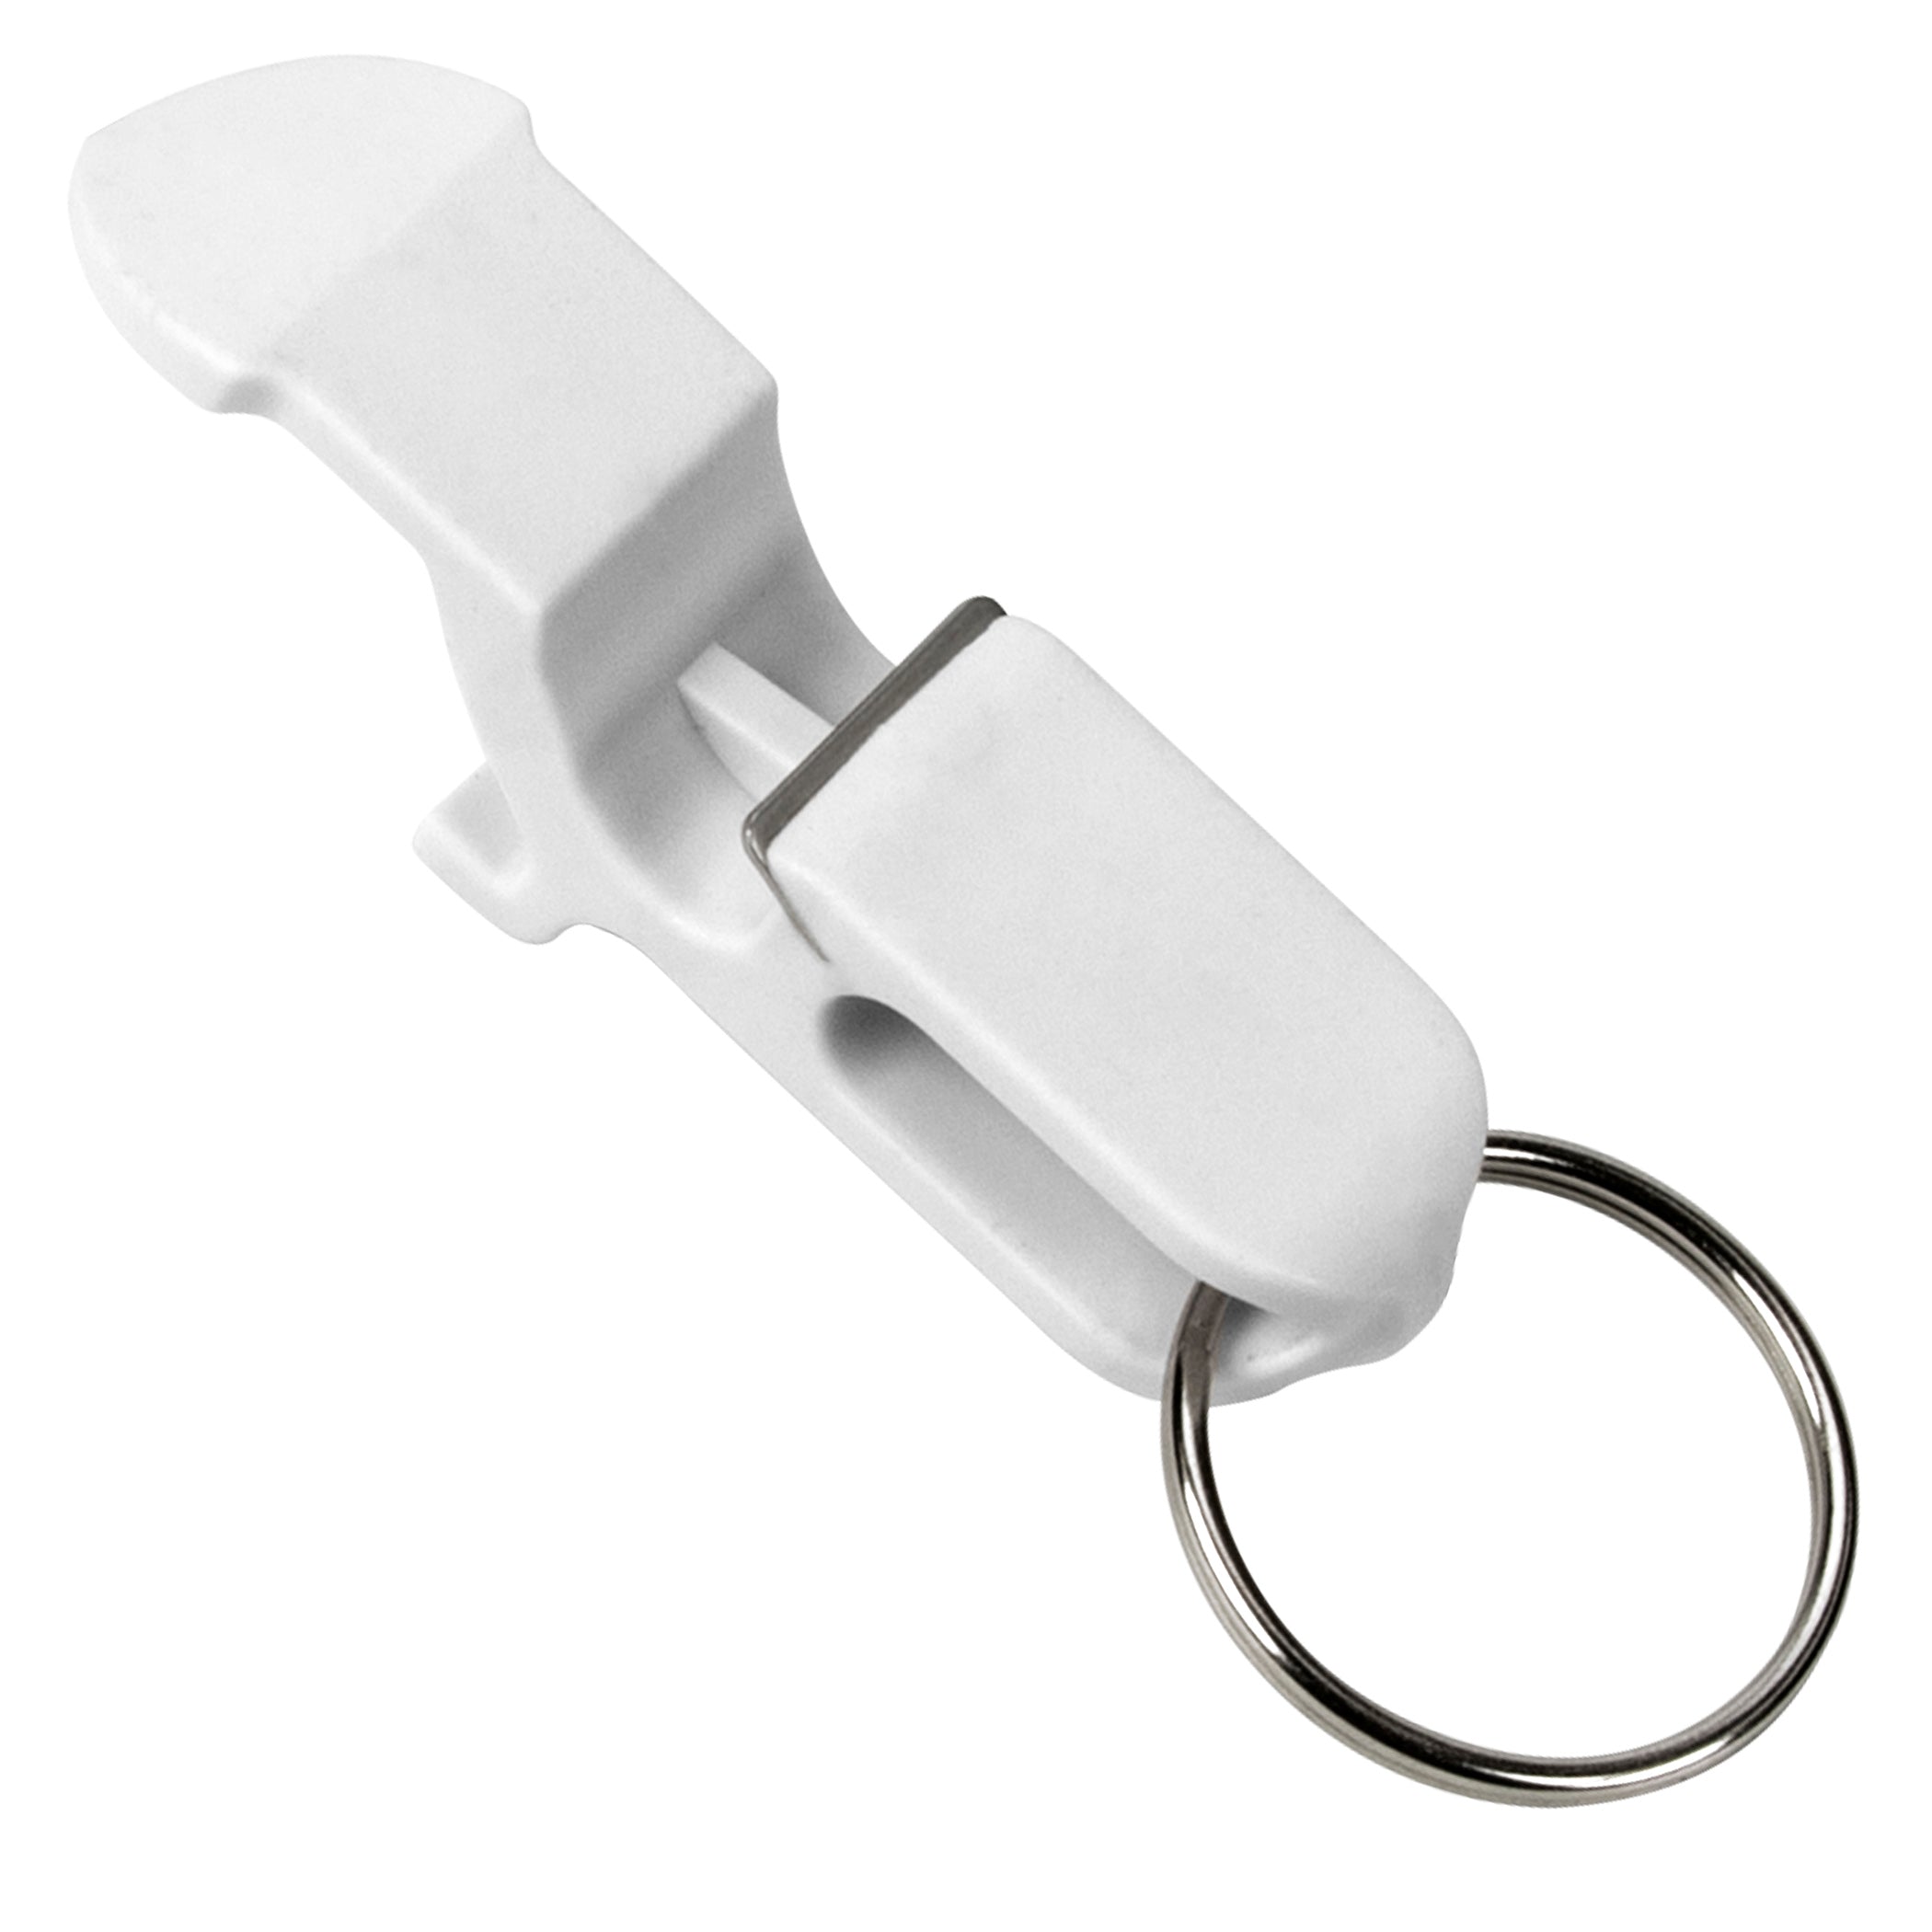 Beer Shotgun tool bottle opener keychain - Brilliant Promos - Be Brilliant!